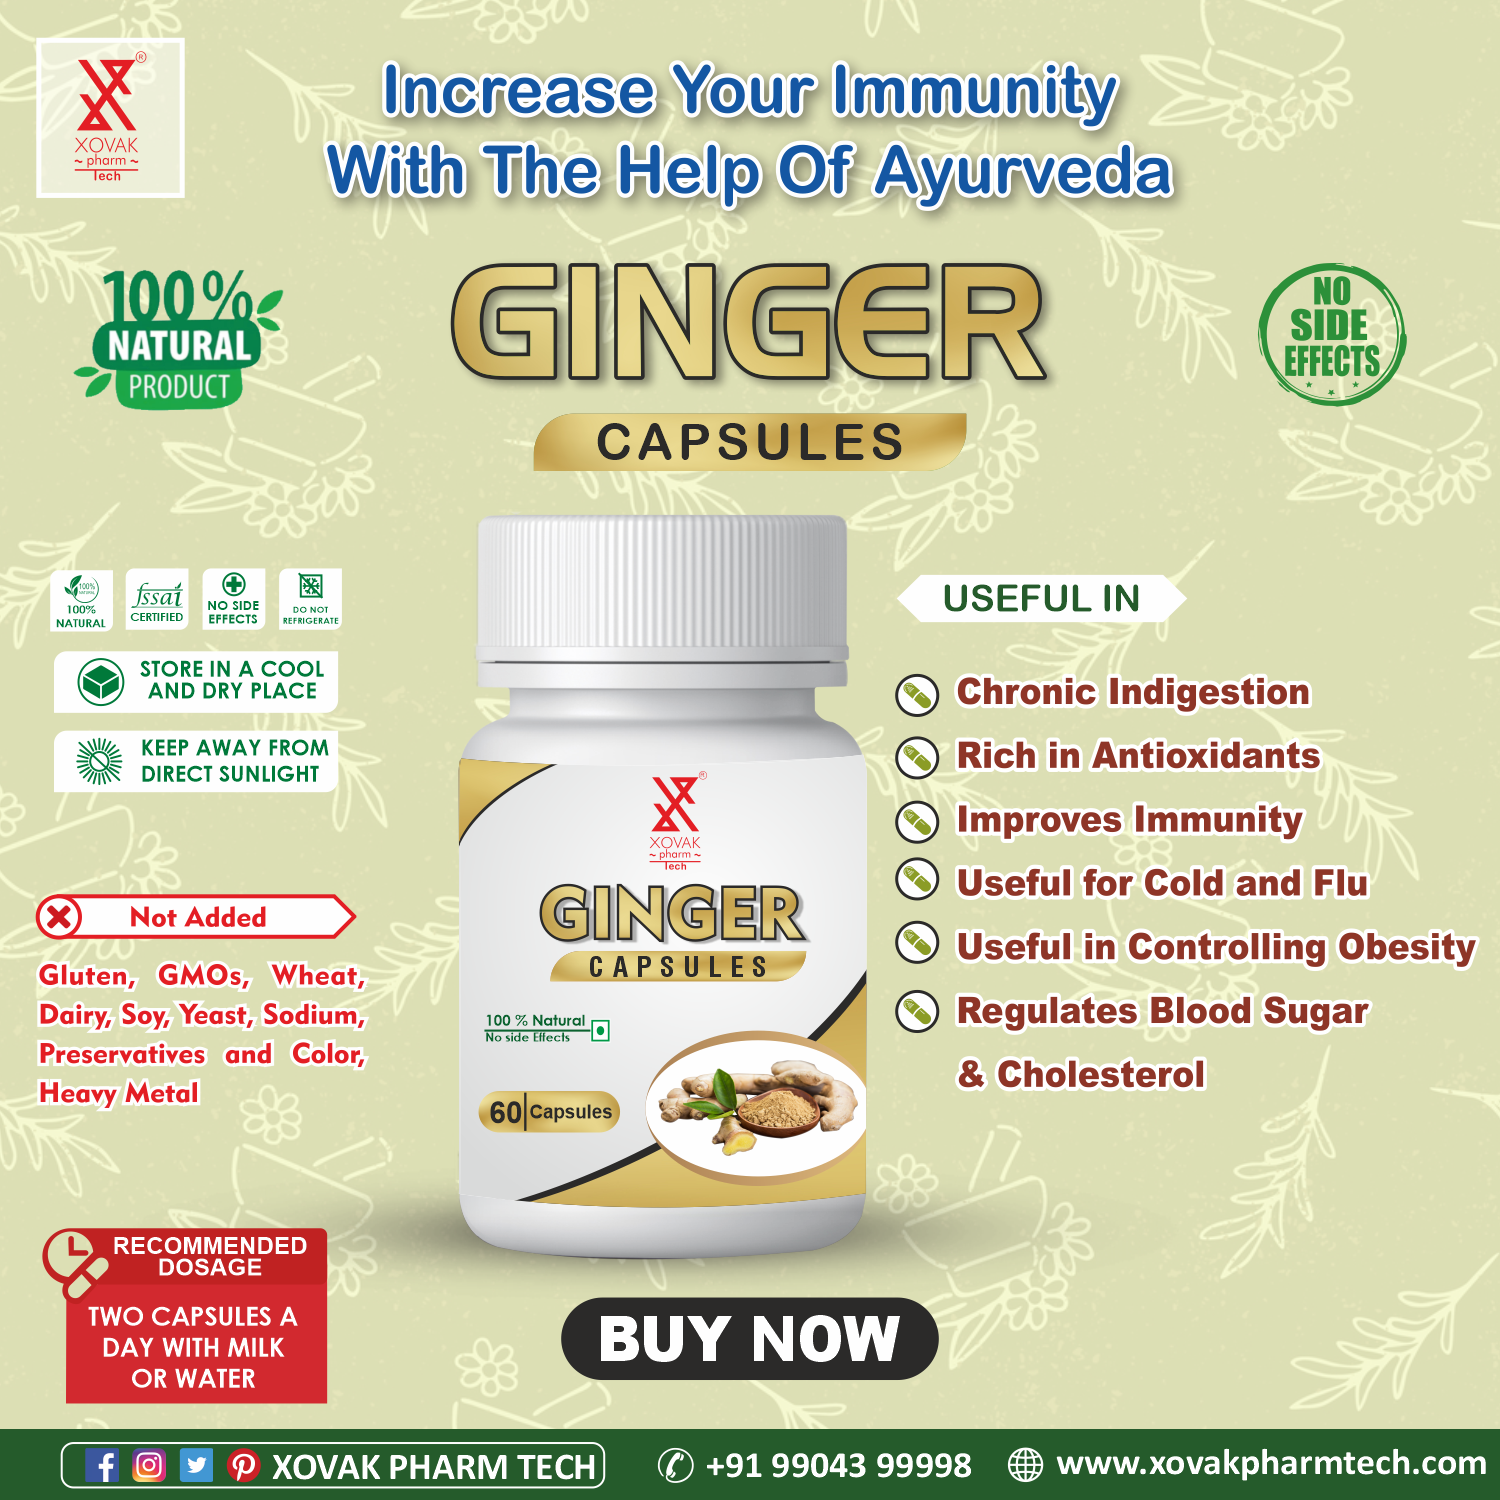 Buy Xovak Organic Ginger Capsules (60caps) at Best Price Online